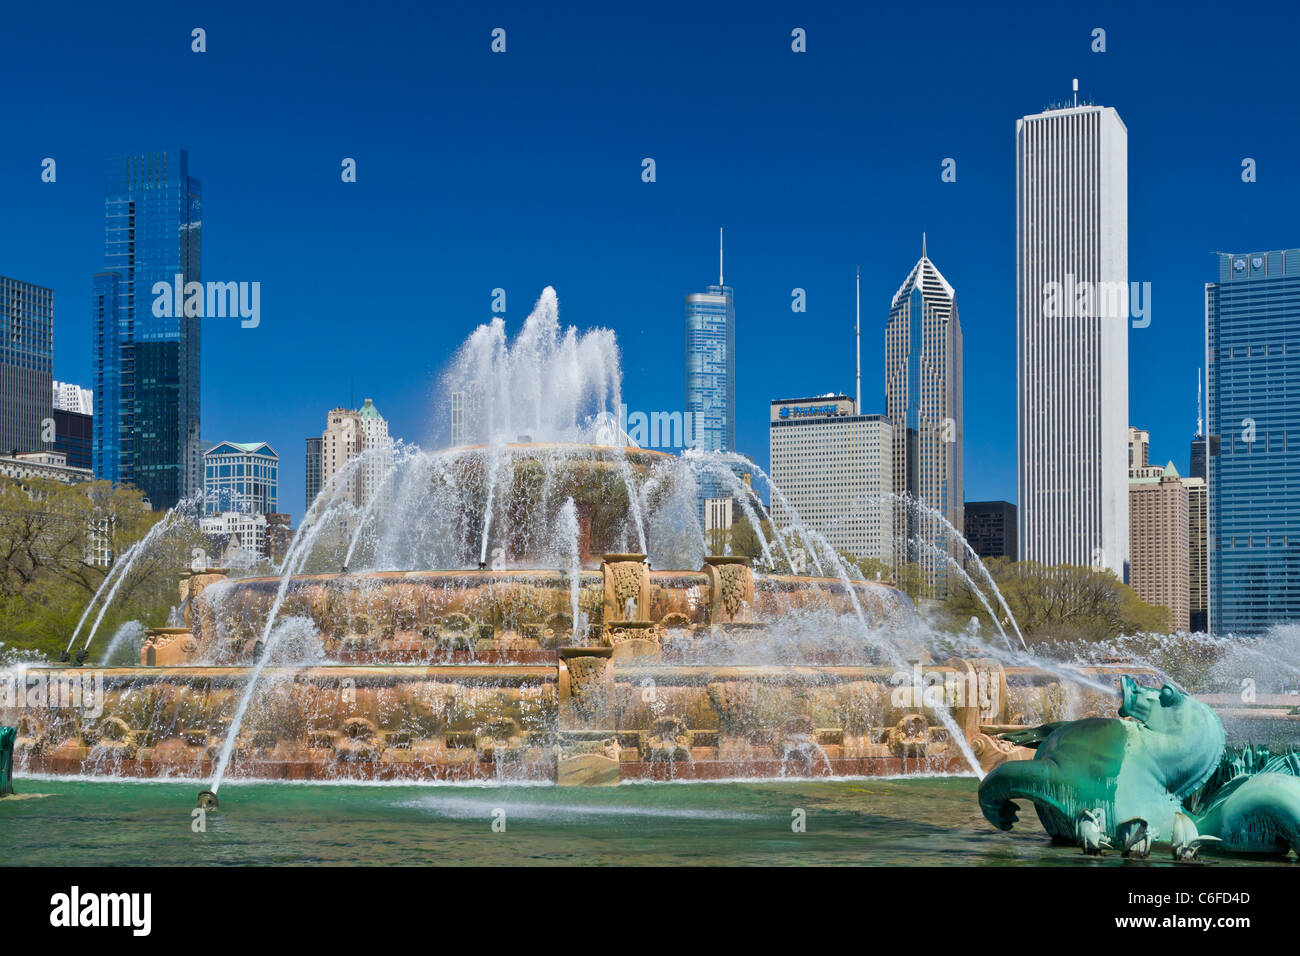 Die Clarence Buckingham Memorial Fountain auf Lakeshore Dr. in Chicago, Illinois, USA. Stockfoto